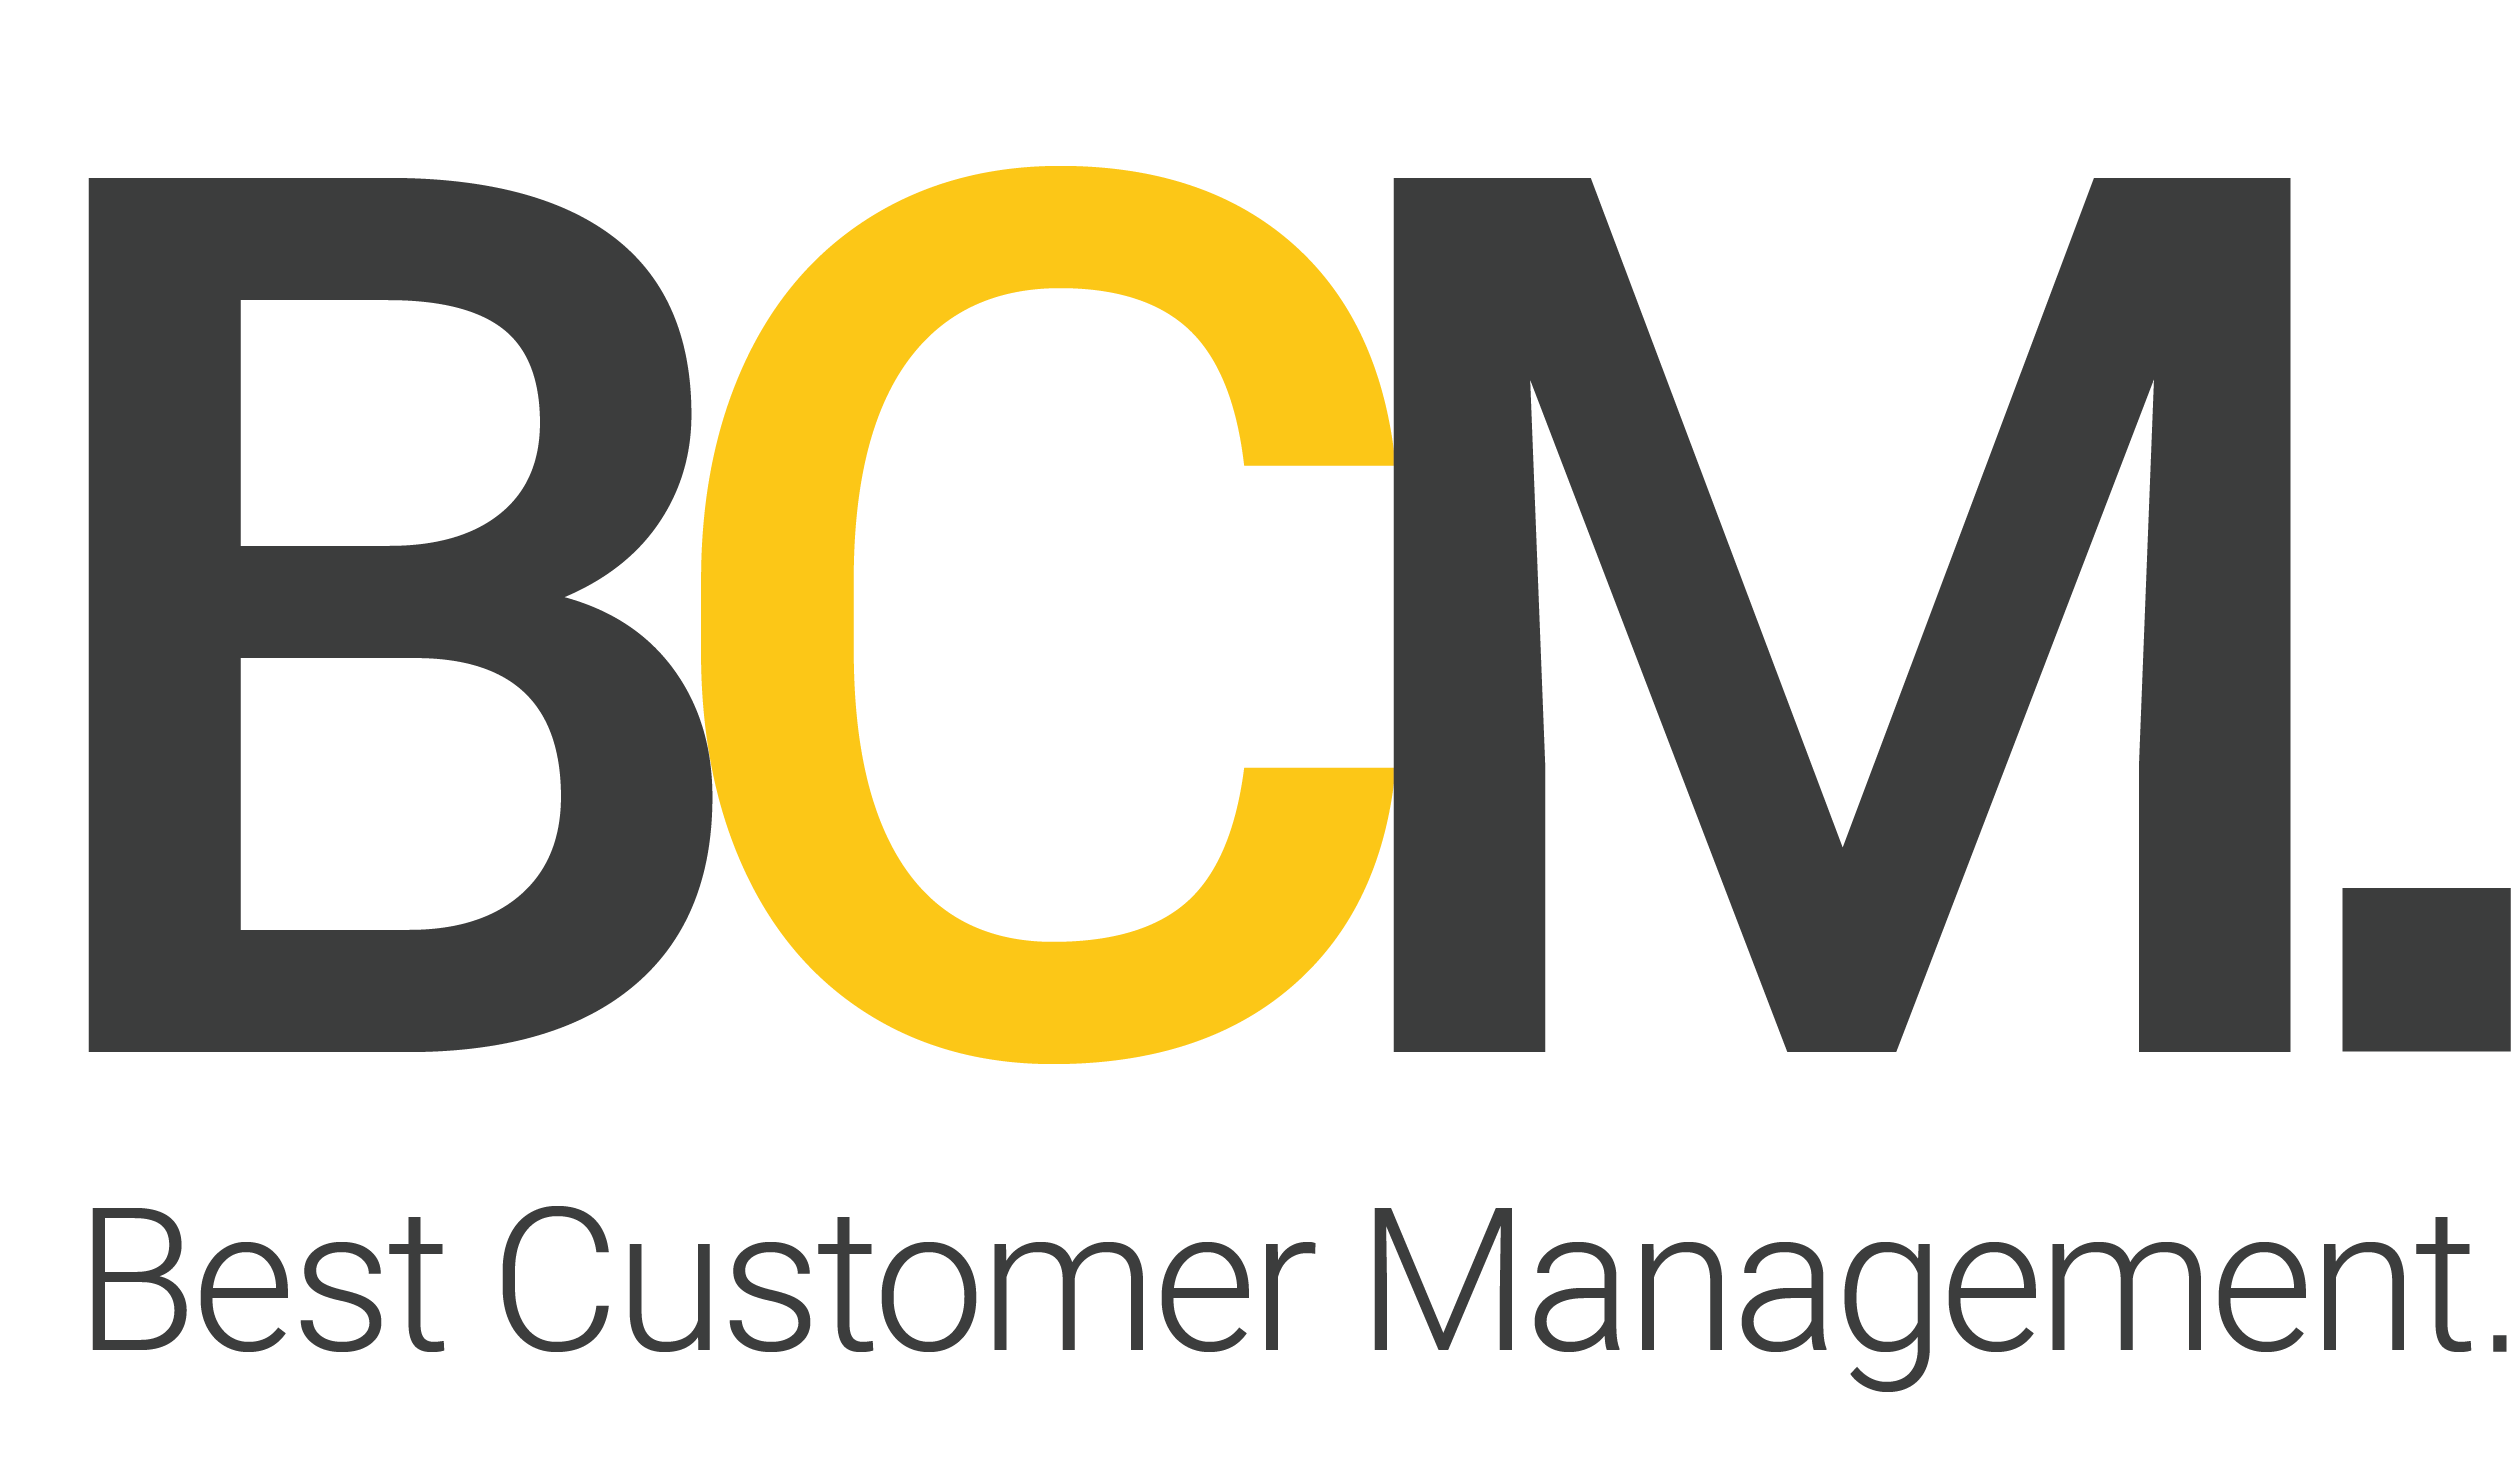 BCM Best Customer Management